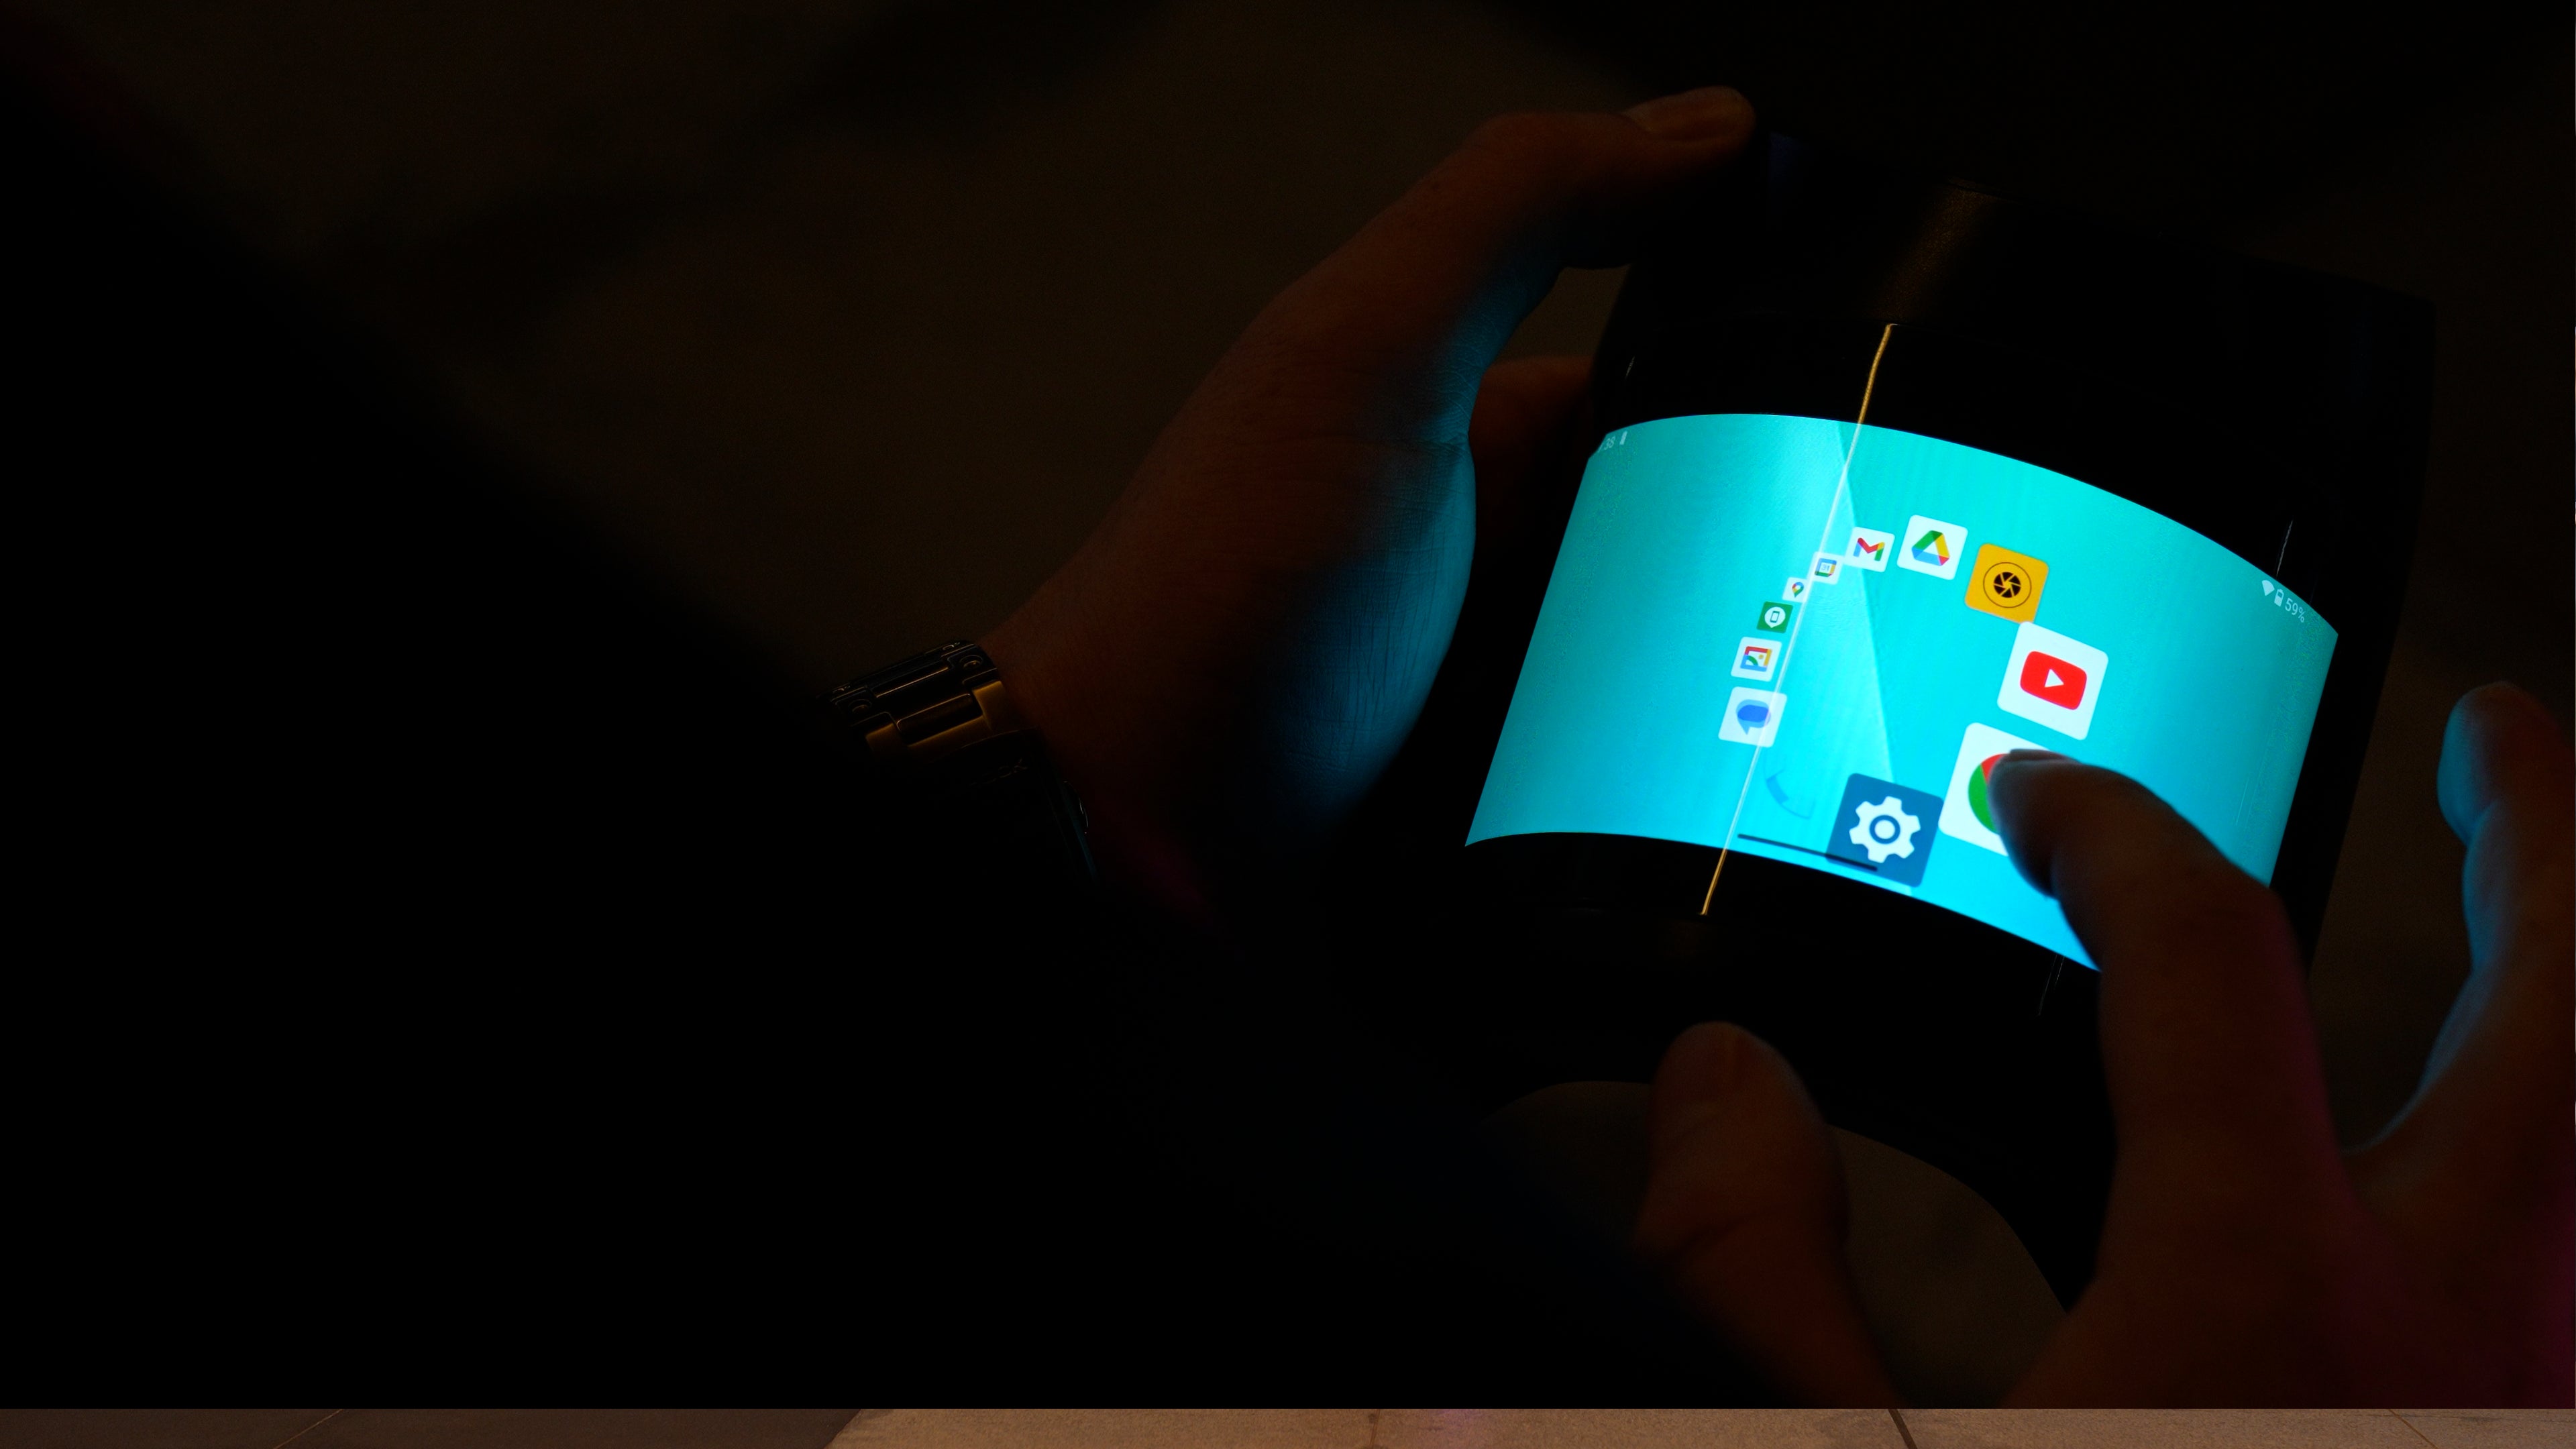 AMOLED Touchscreen (Android Smart Device) - USOflex1-screenappscircle